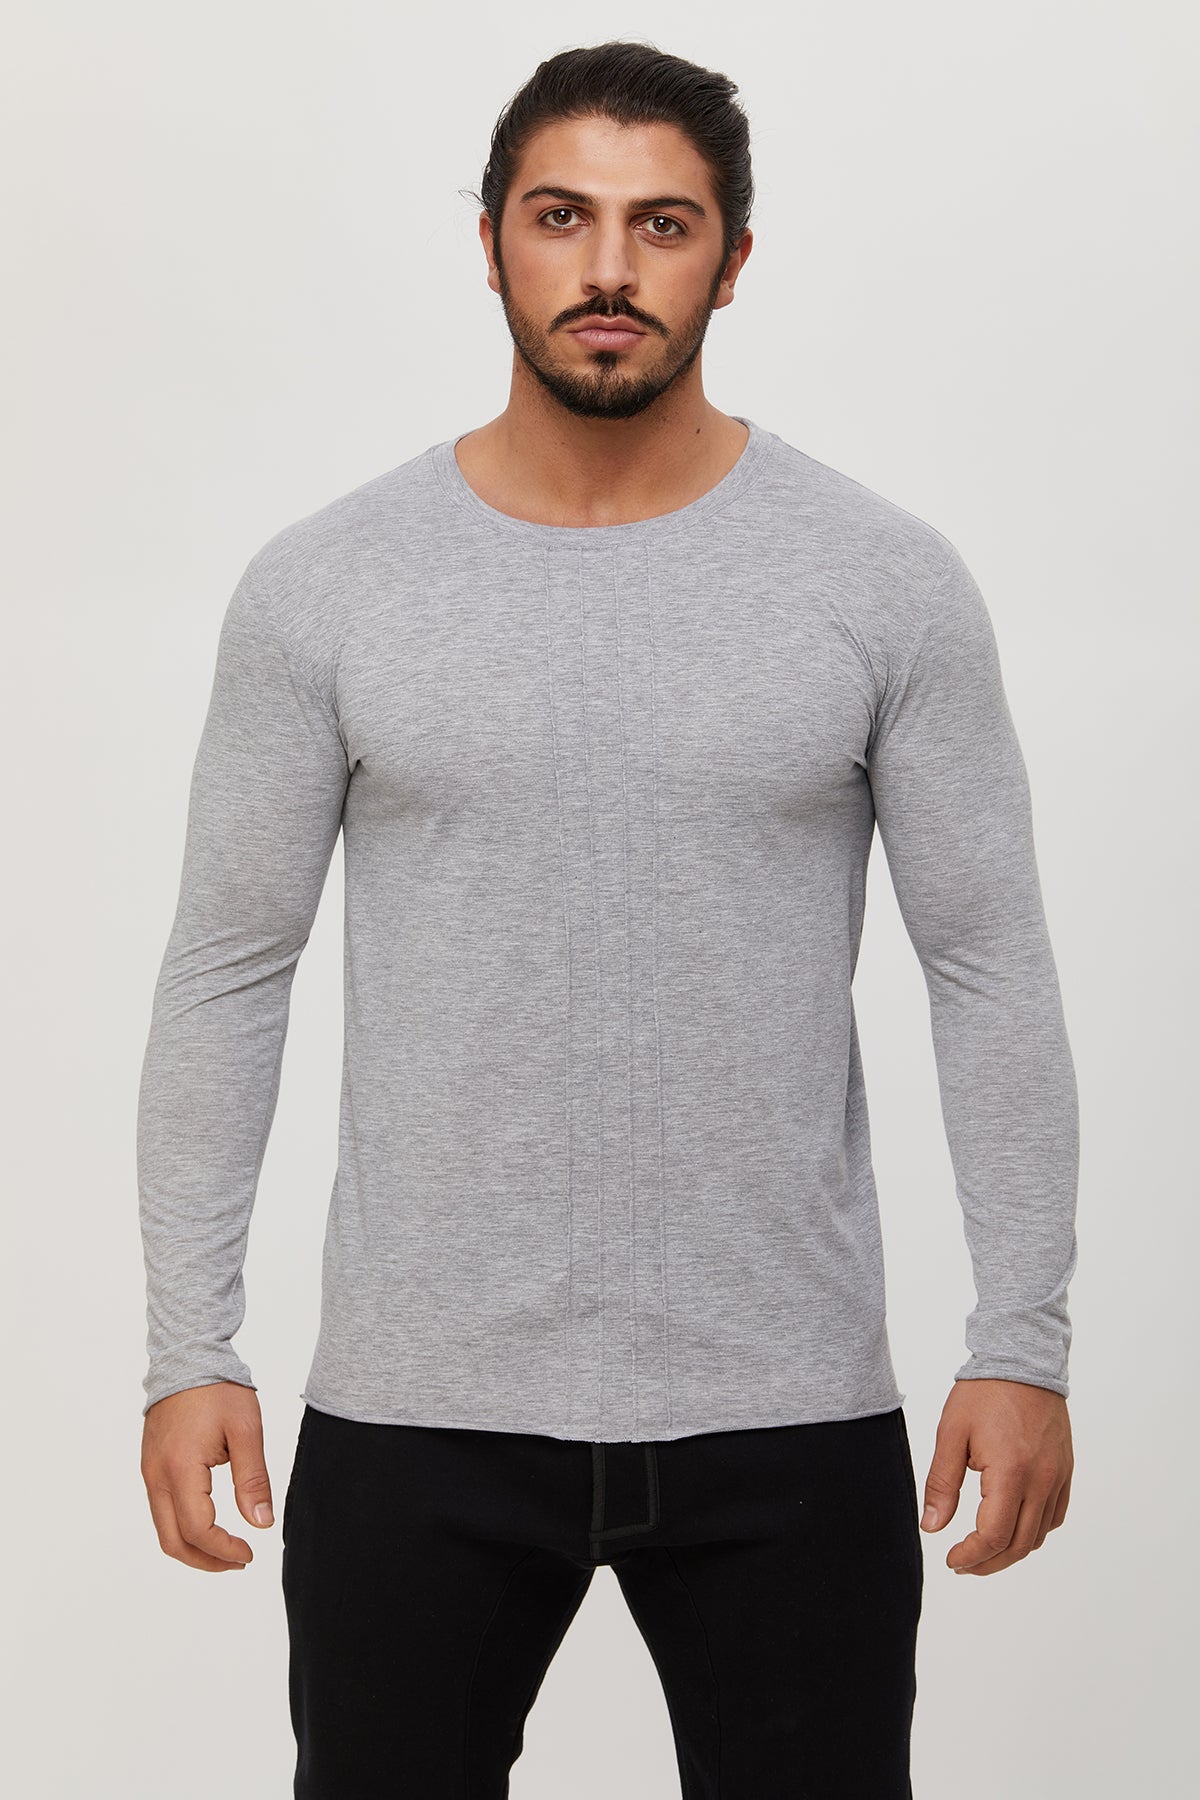 Men's modern long sleeve t-shirts,Tops-Tees. 100 % Great quality Turkish Cotton. Stylish, luxurious. Big Winter Sale.